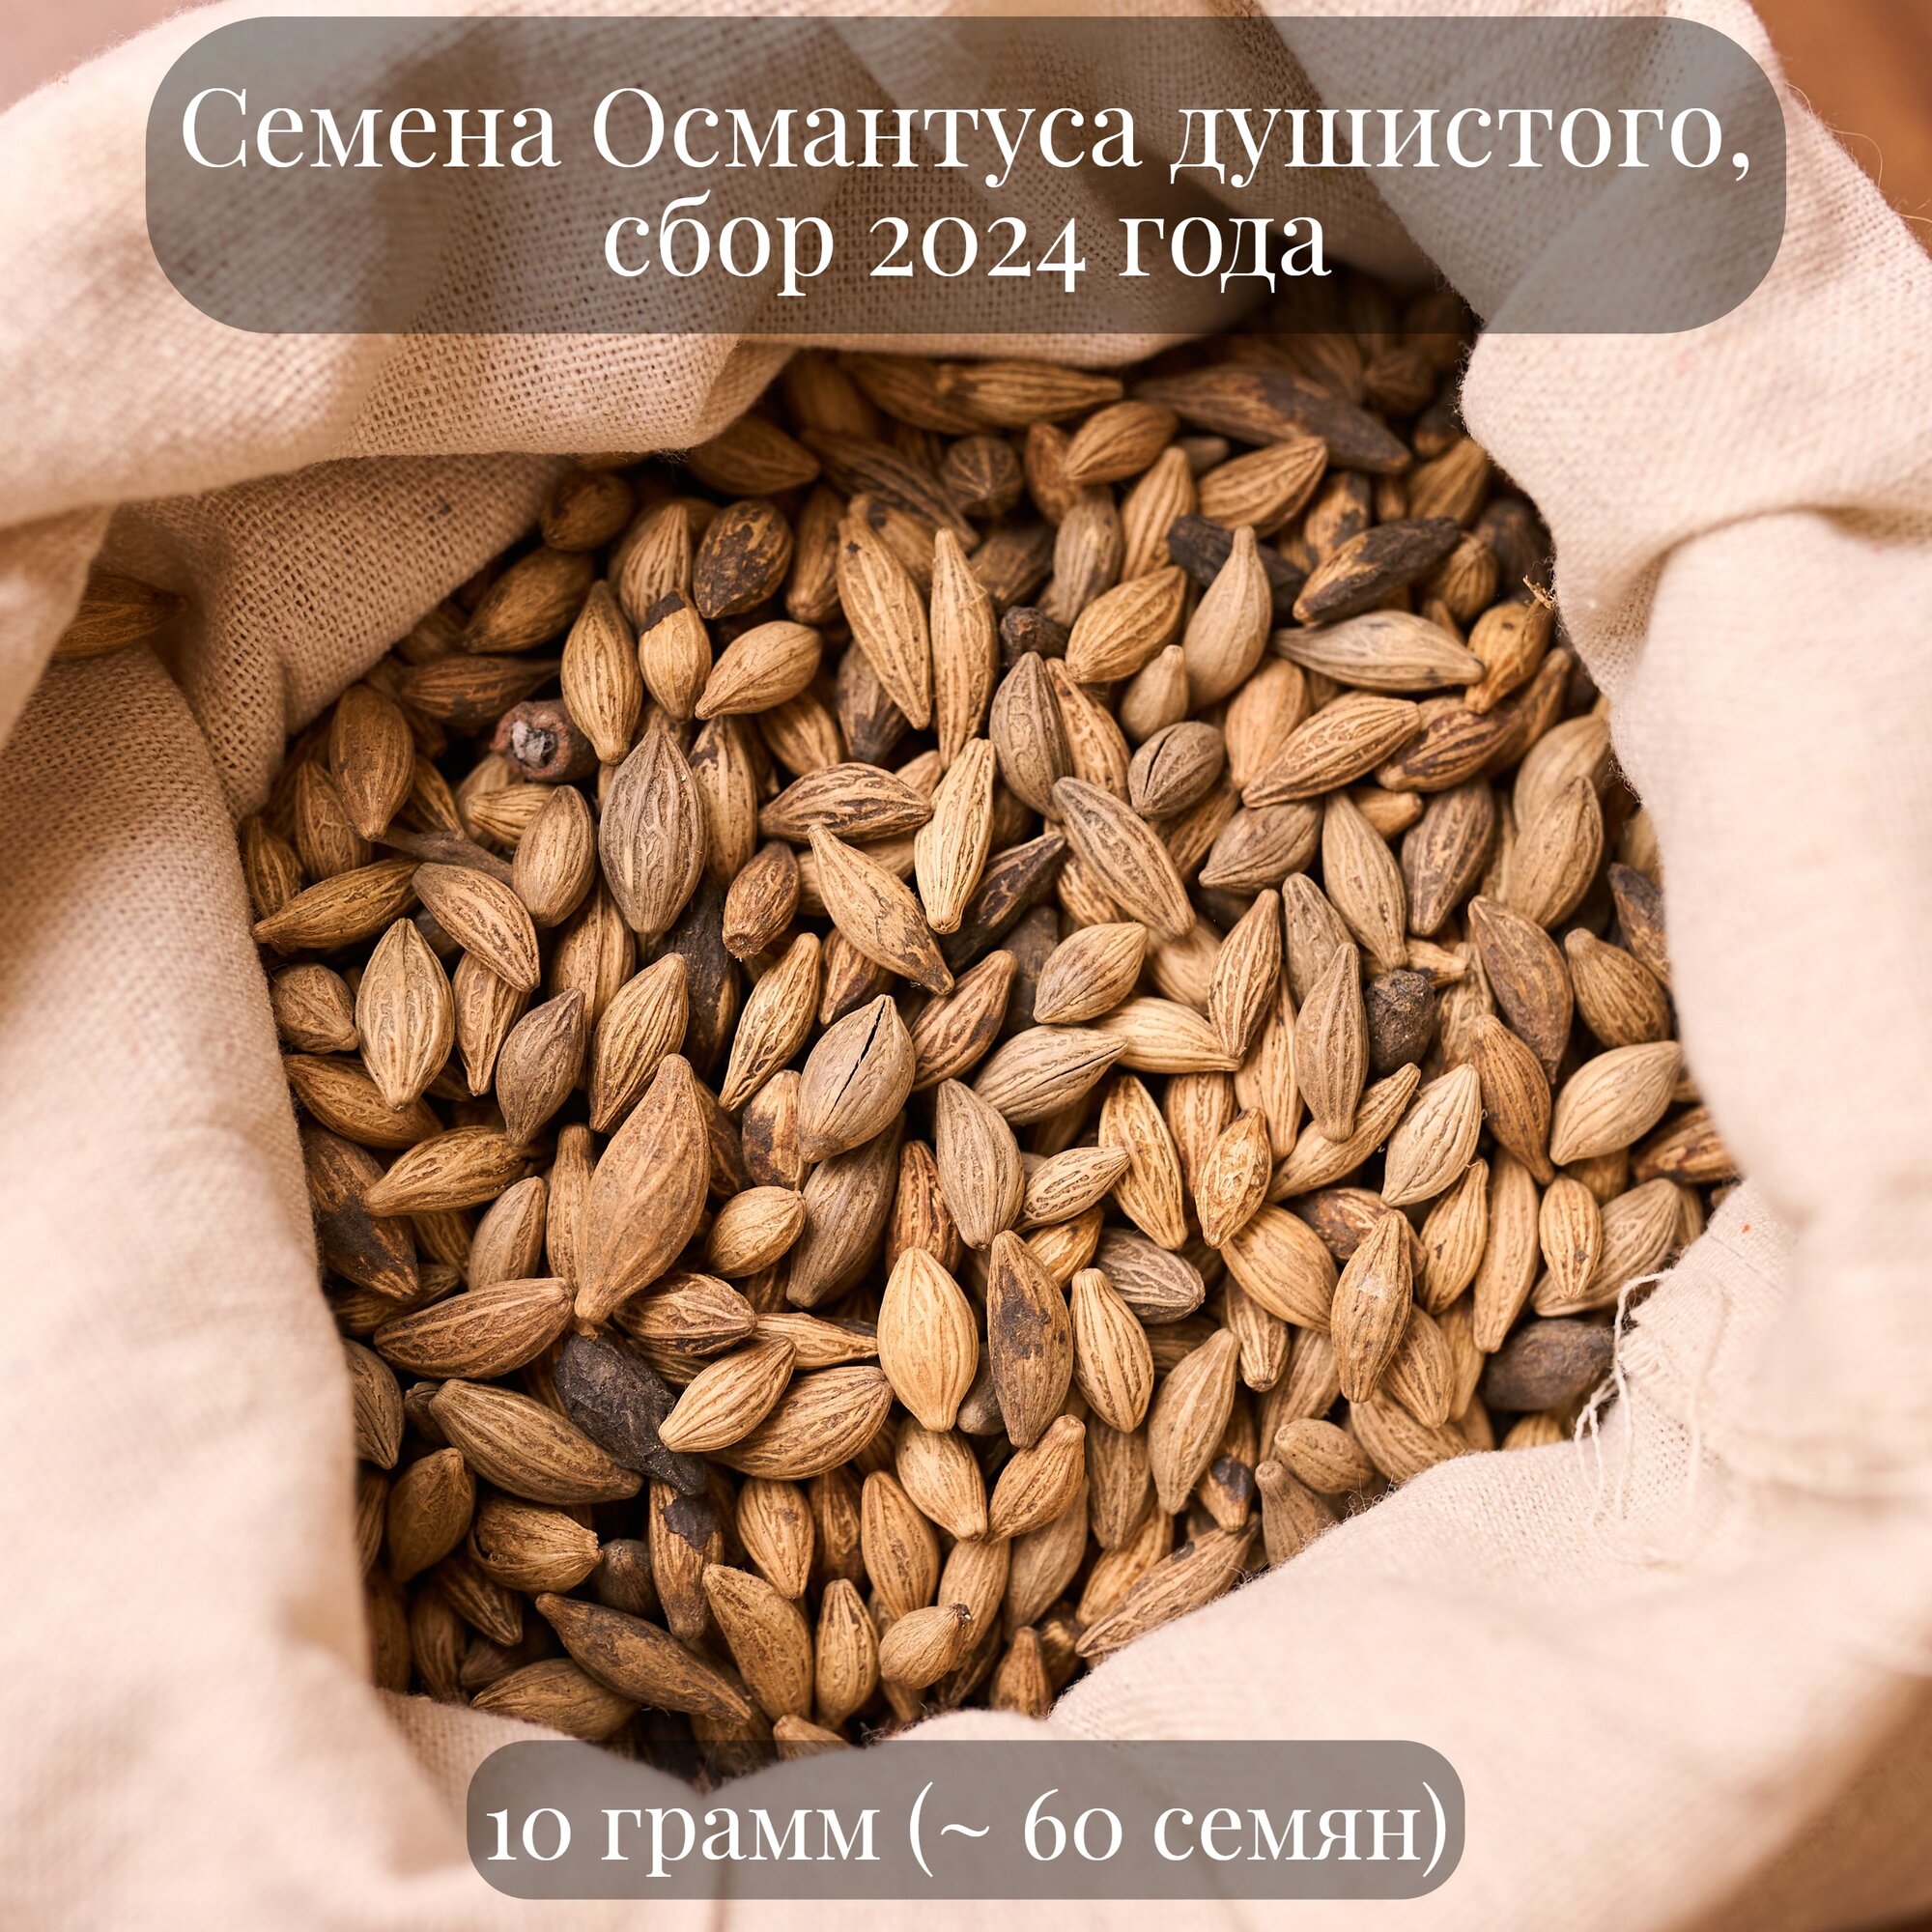 Семена Османтуса душистого желтого, 10 грамм (примерно 60 шт)